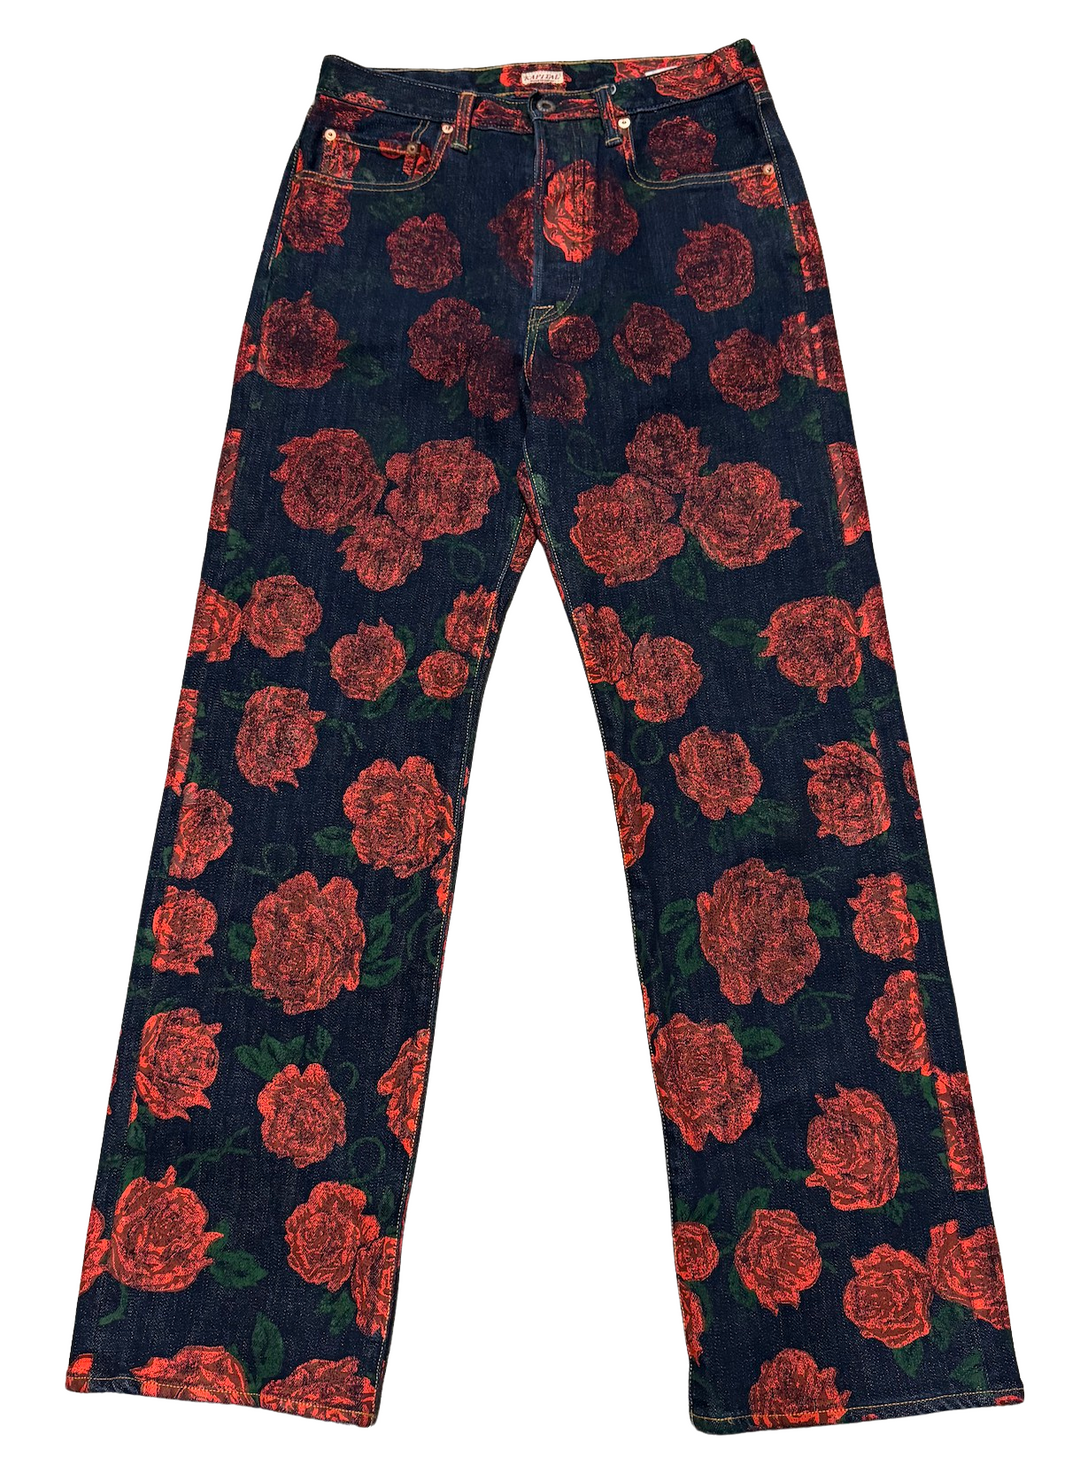 Kapital 'Rose Print' Monkey Cisco Jeans